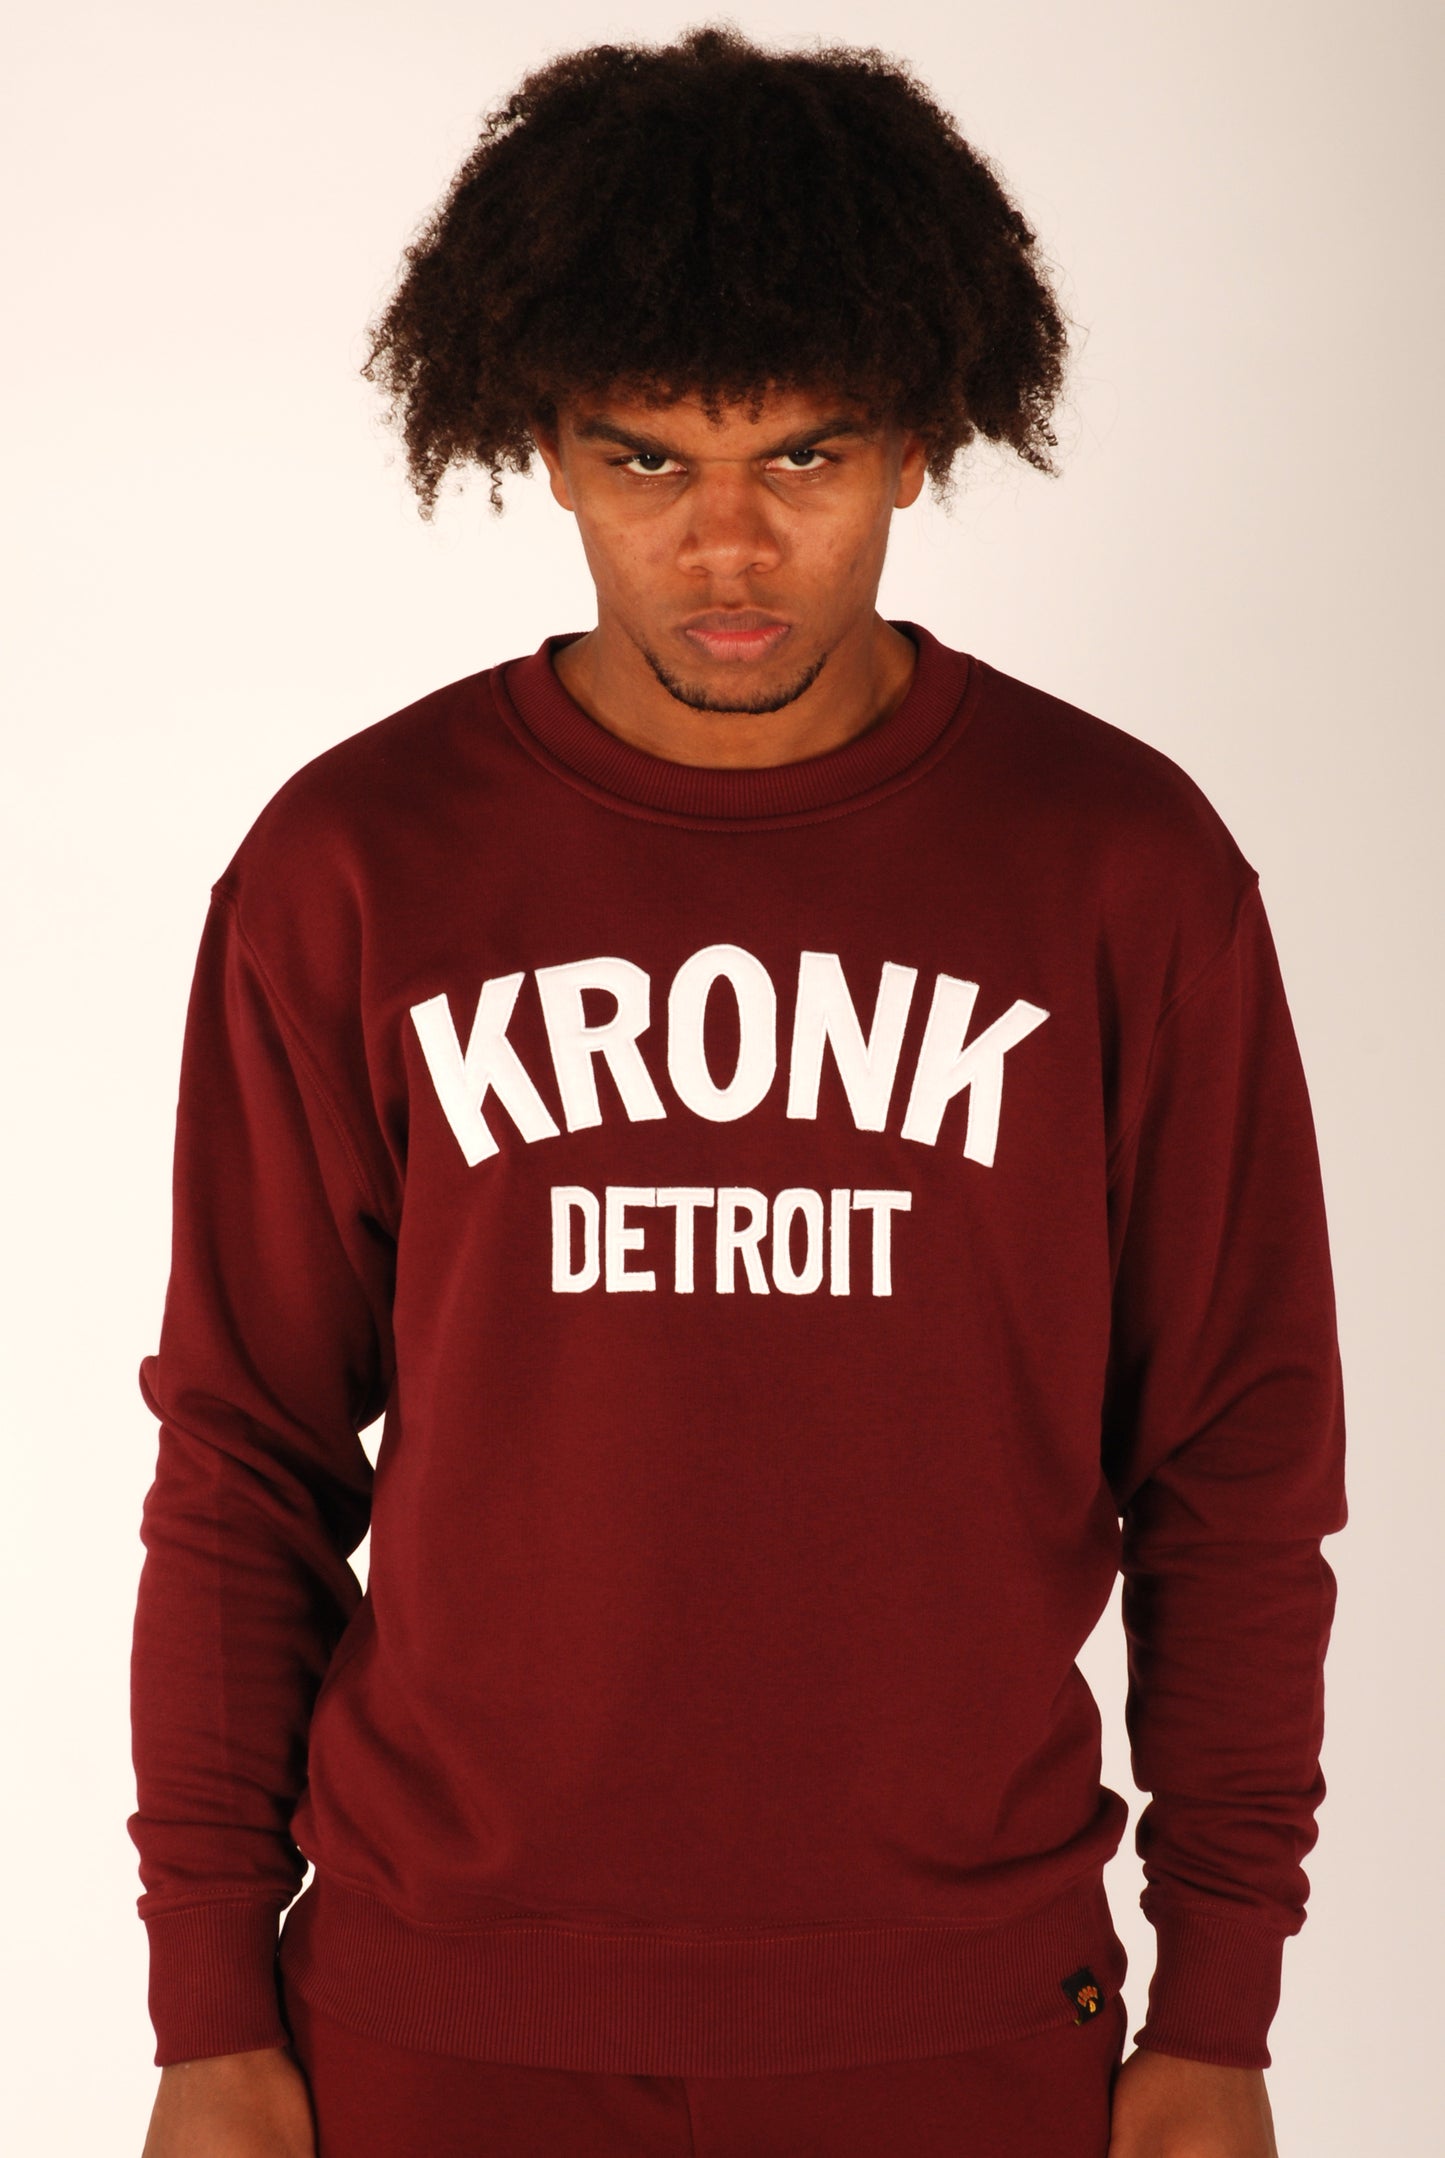 KRONK Detroit Applique Sweatshirt Loose Fit Maroon